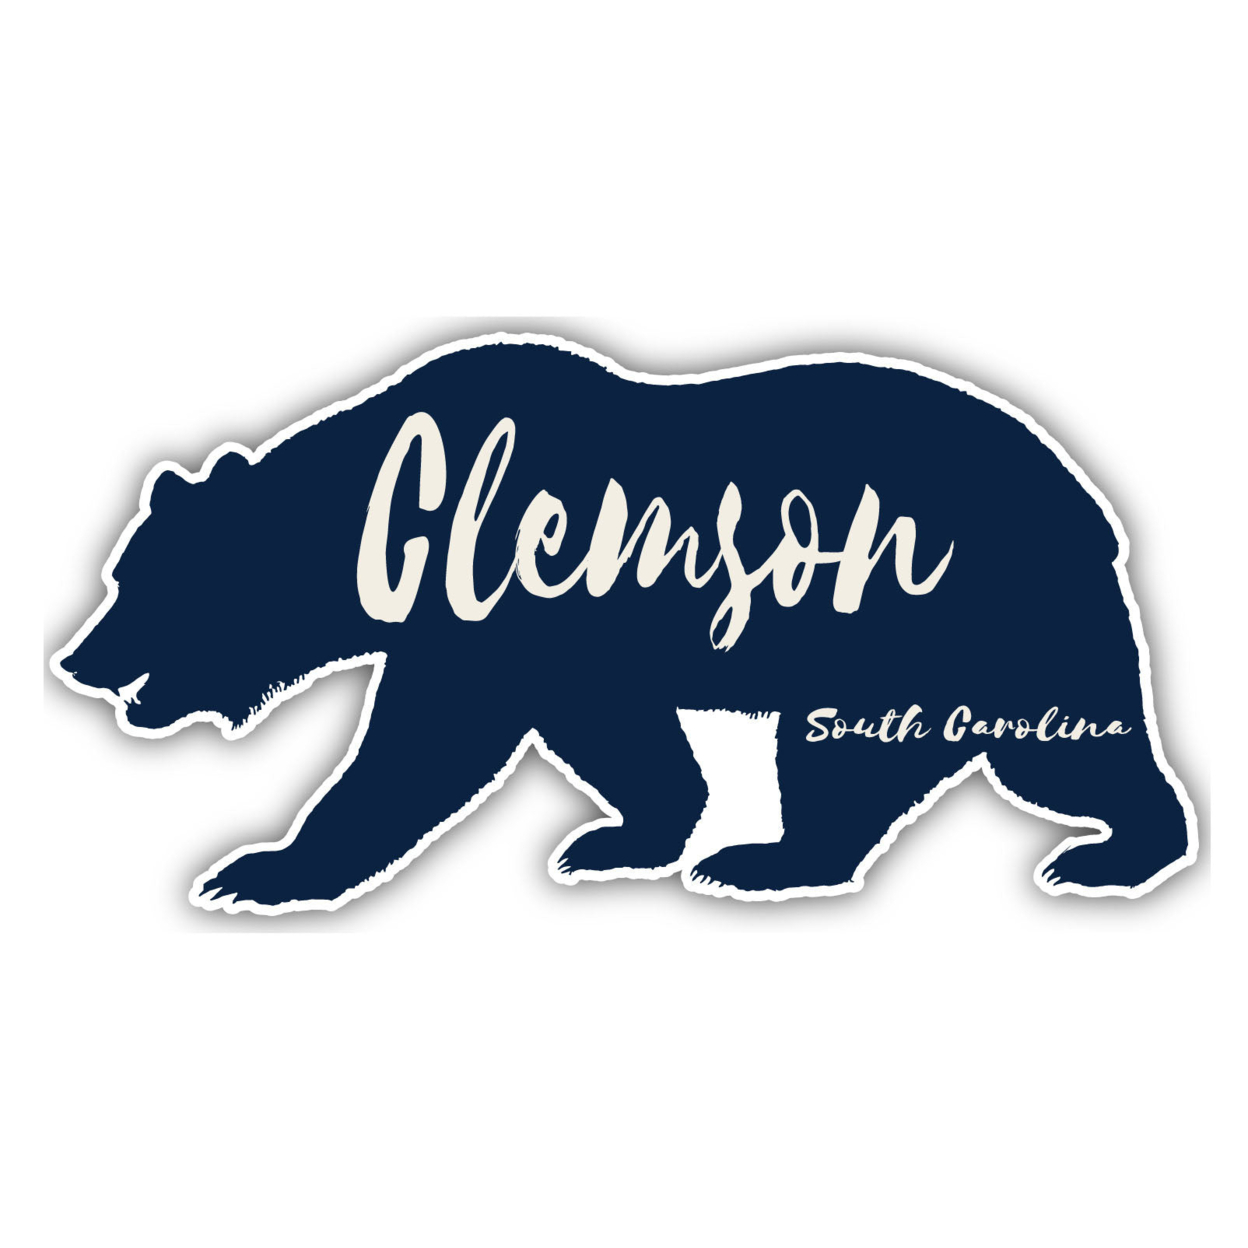 Clemson South Carolina Souvenir Decorative Stickers (Choose Theme And Size) - 4-Pack, 8-Inch, Camp Life